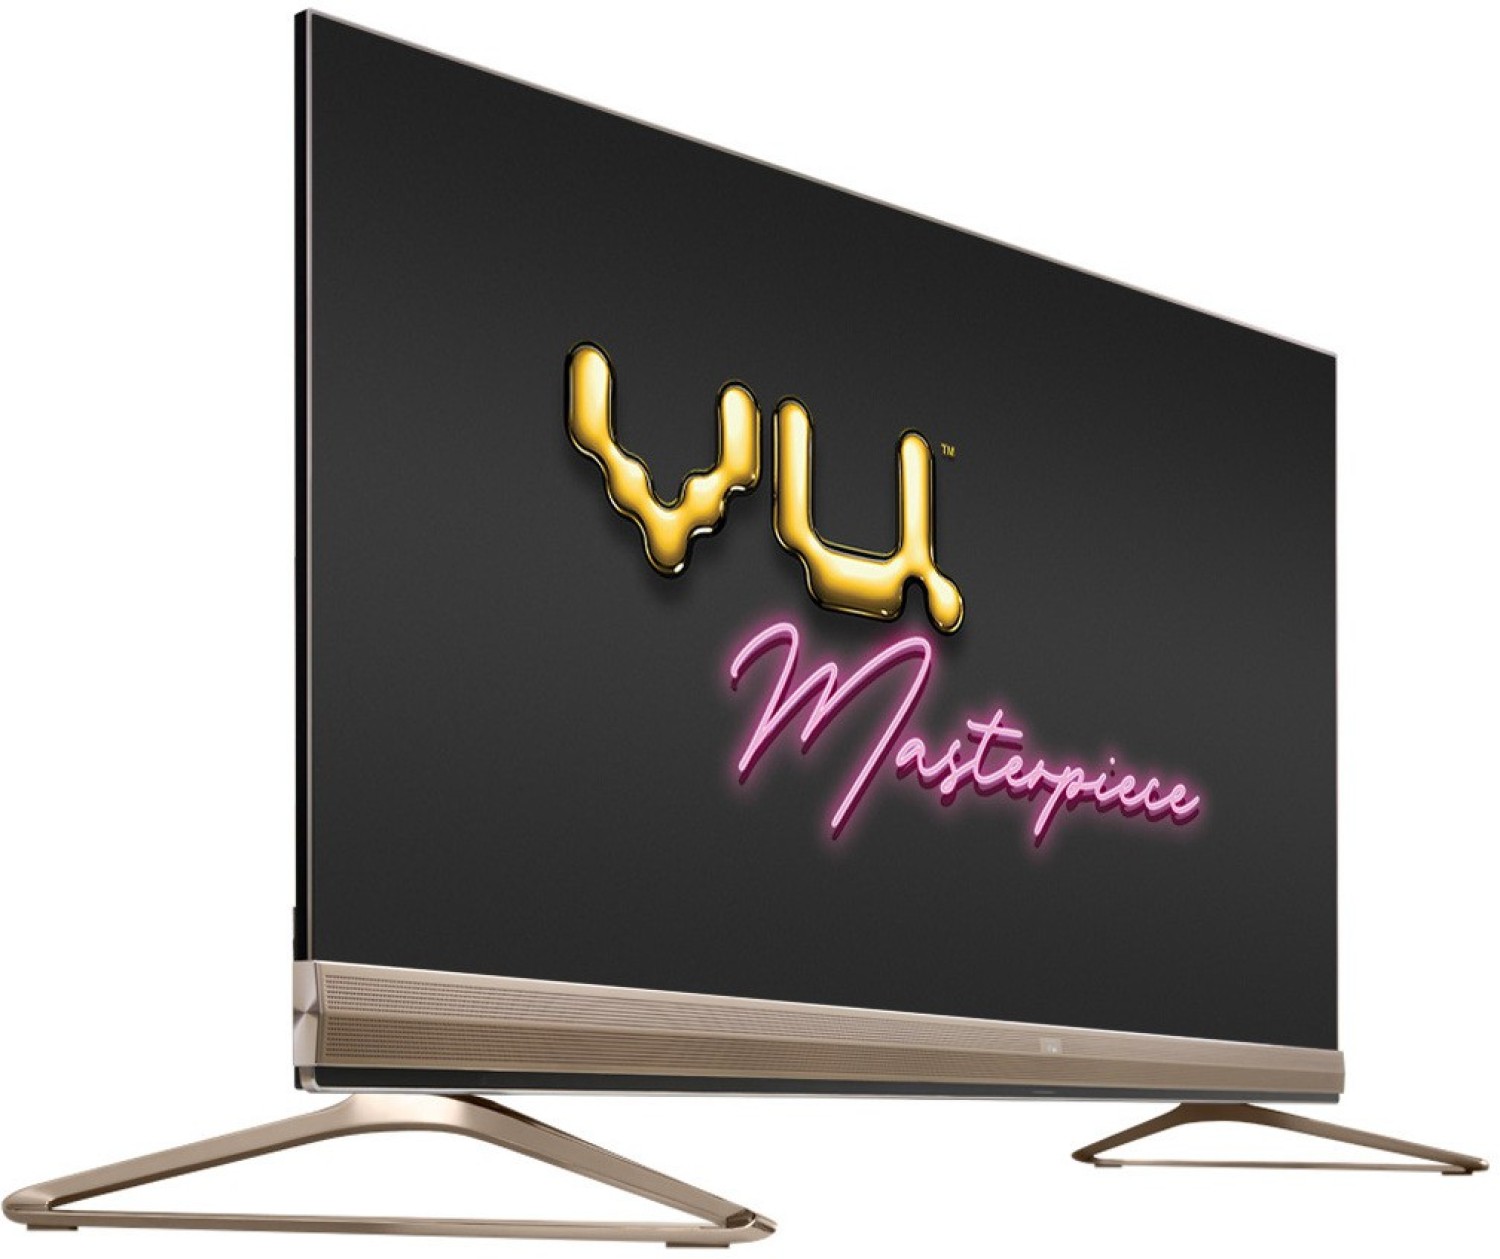 Vu Masterpiece 215 Cm 85 Inch Qled Ultra Hd 4k Smart Android Tv